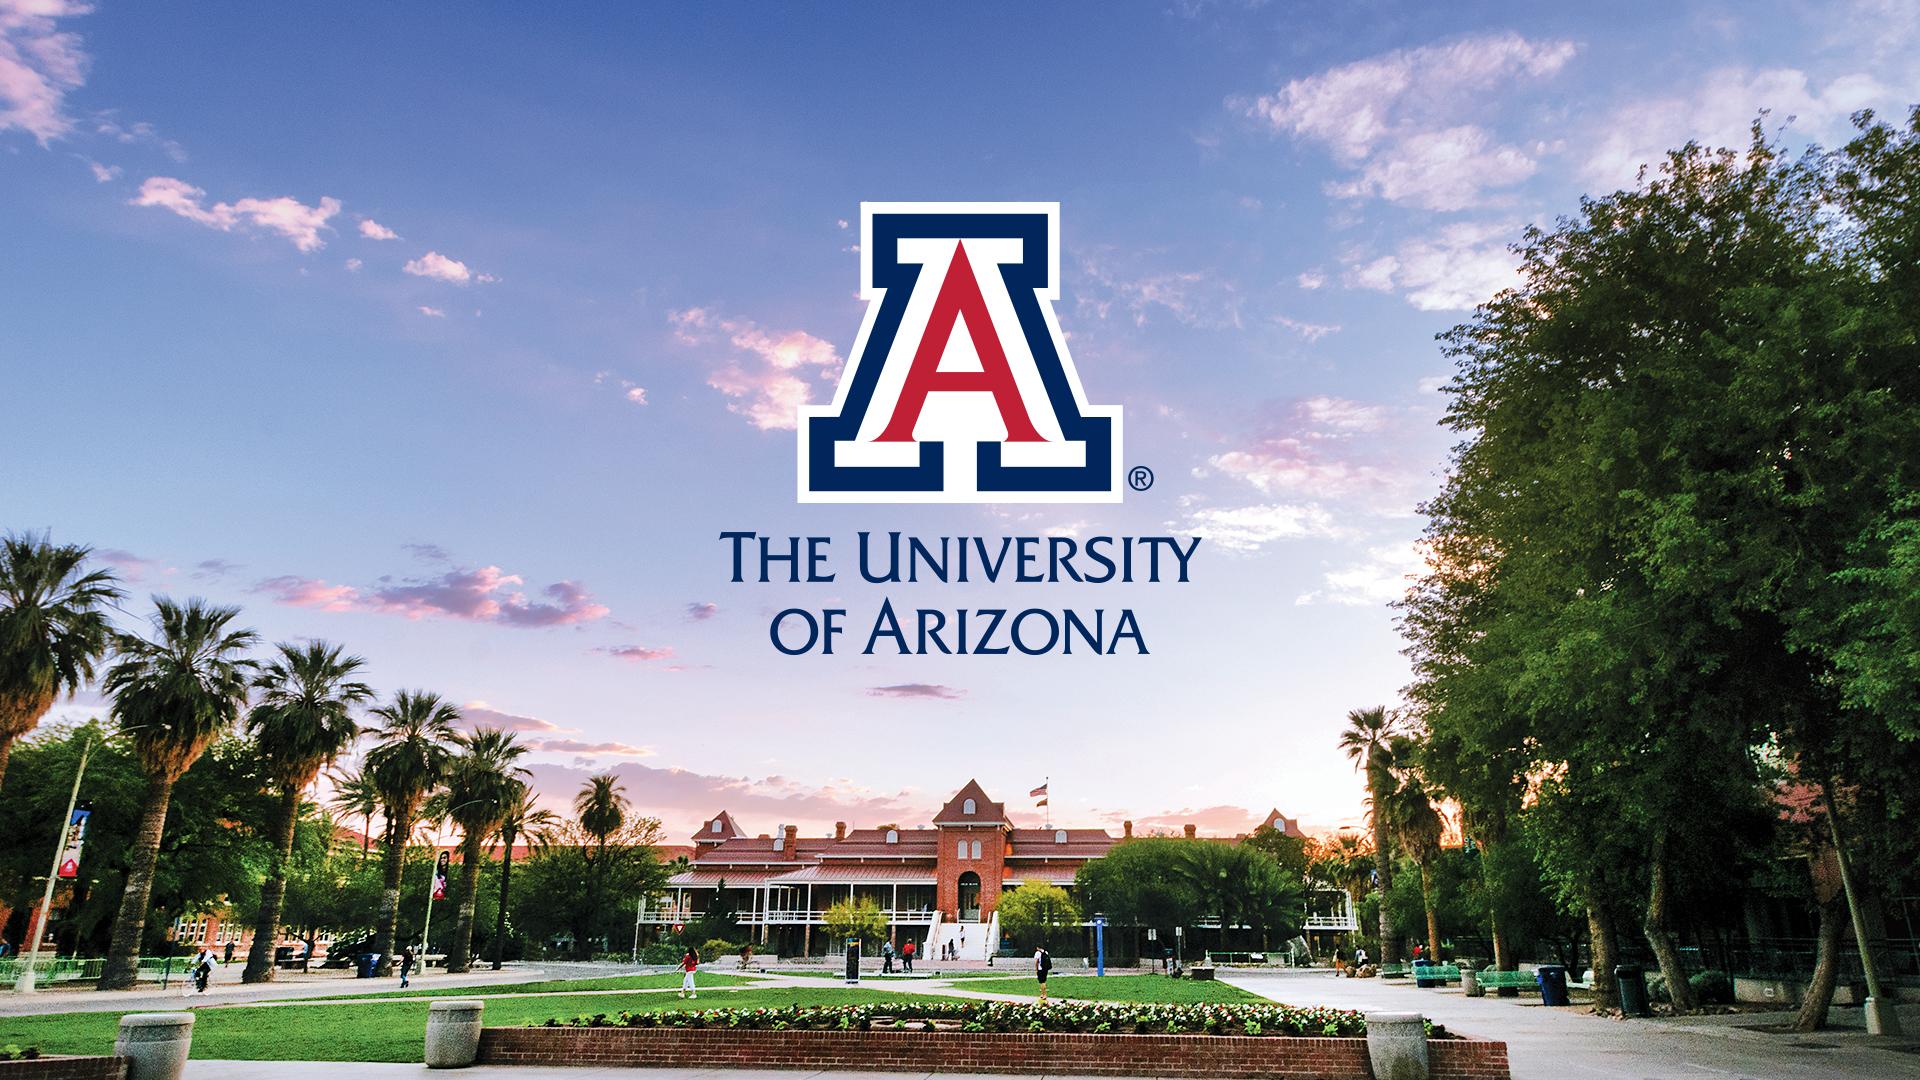 University of Arizona Logo Wallpapers - Top Free University of Arizona ...